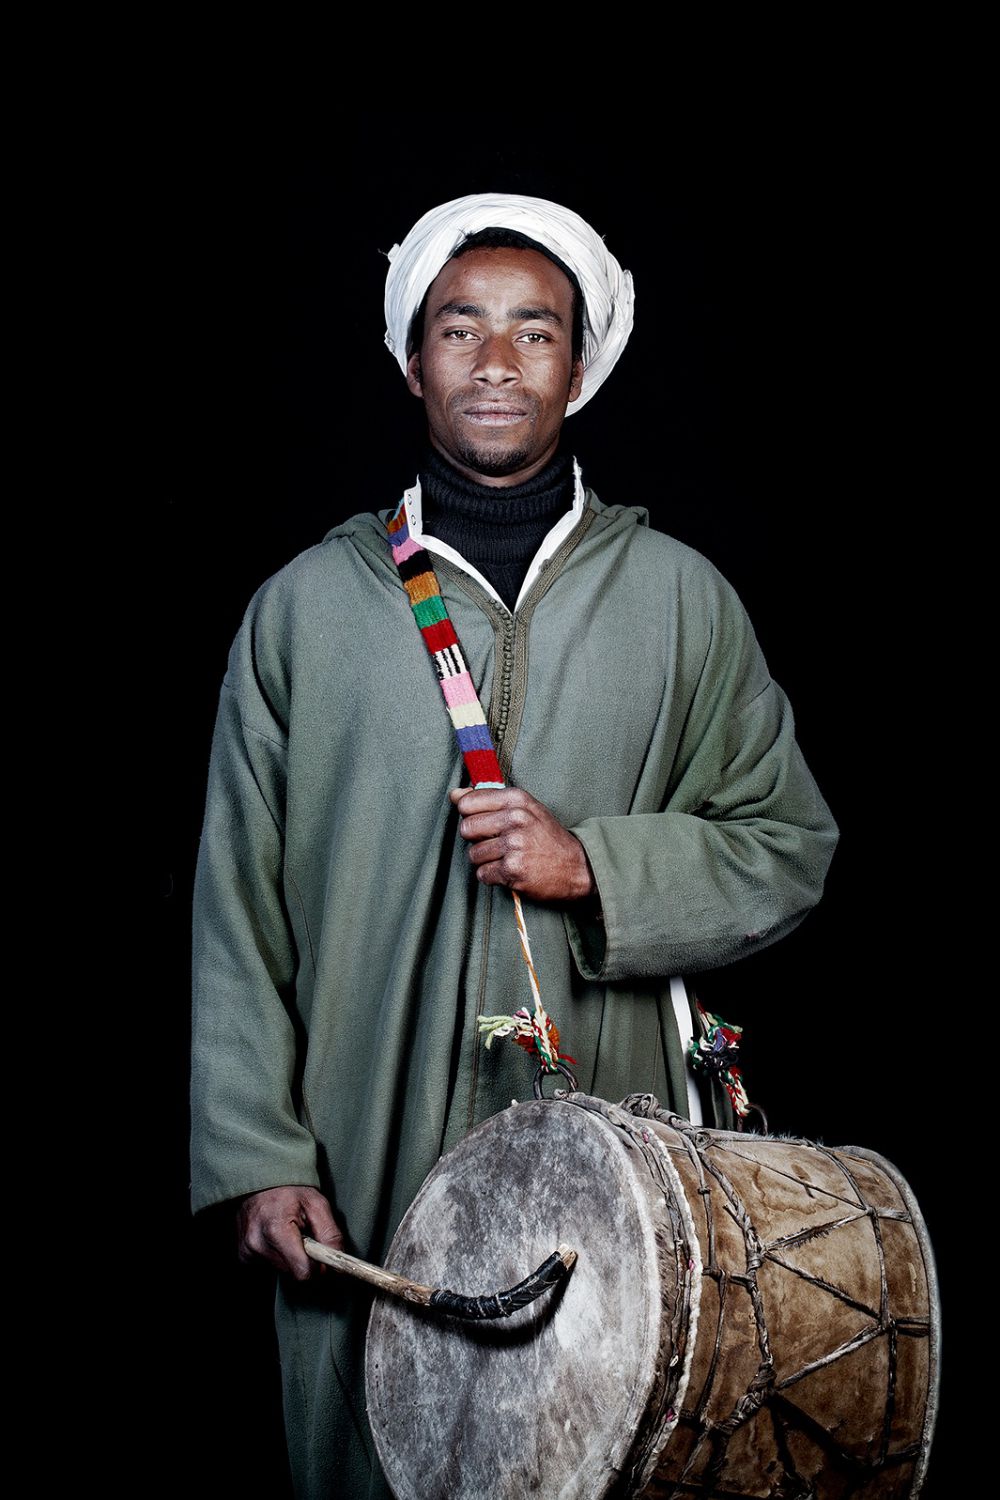 10 Potret orang Maroko ini bikin kamu terpukau, indah banget budayanya